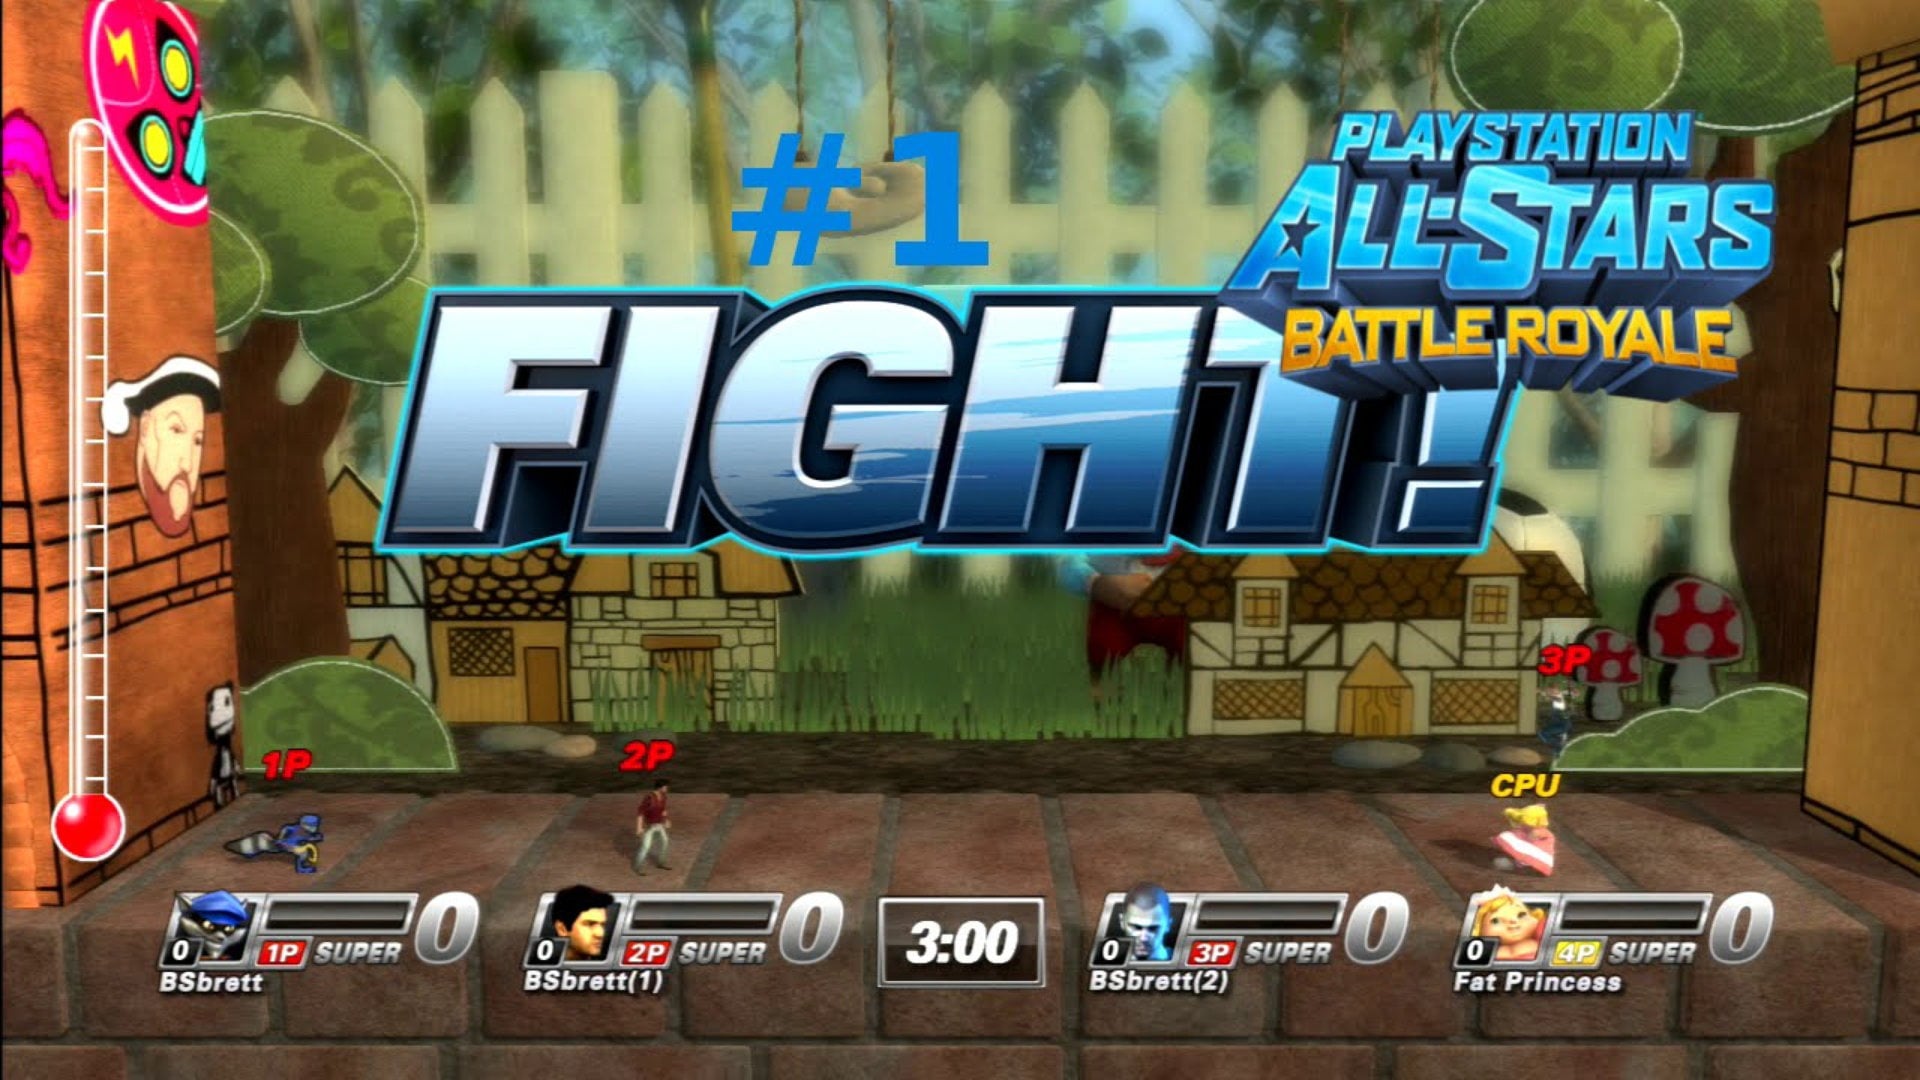 Playstation Allstars Battle Royale - #1 - Fat Princess